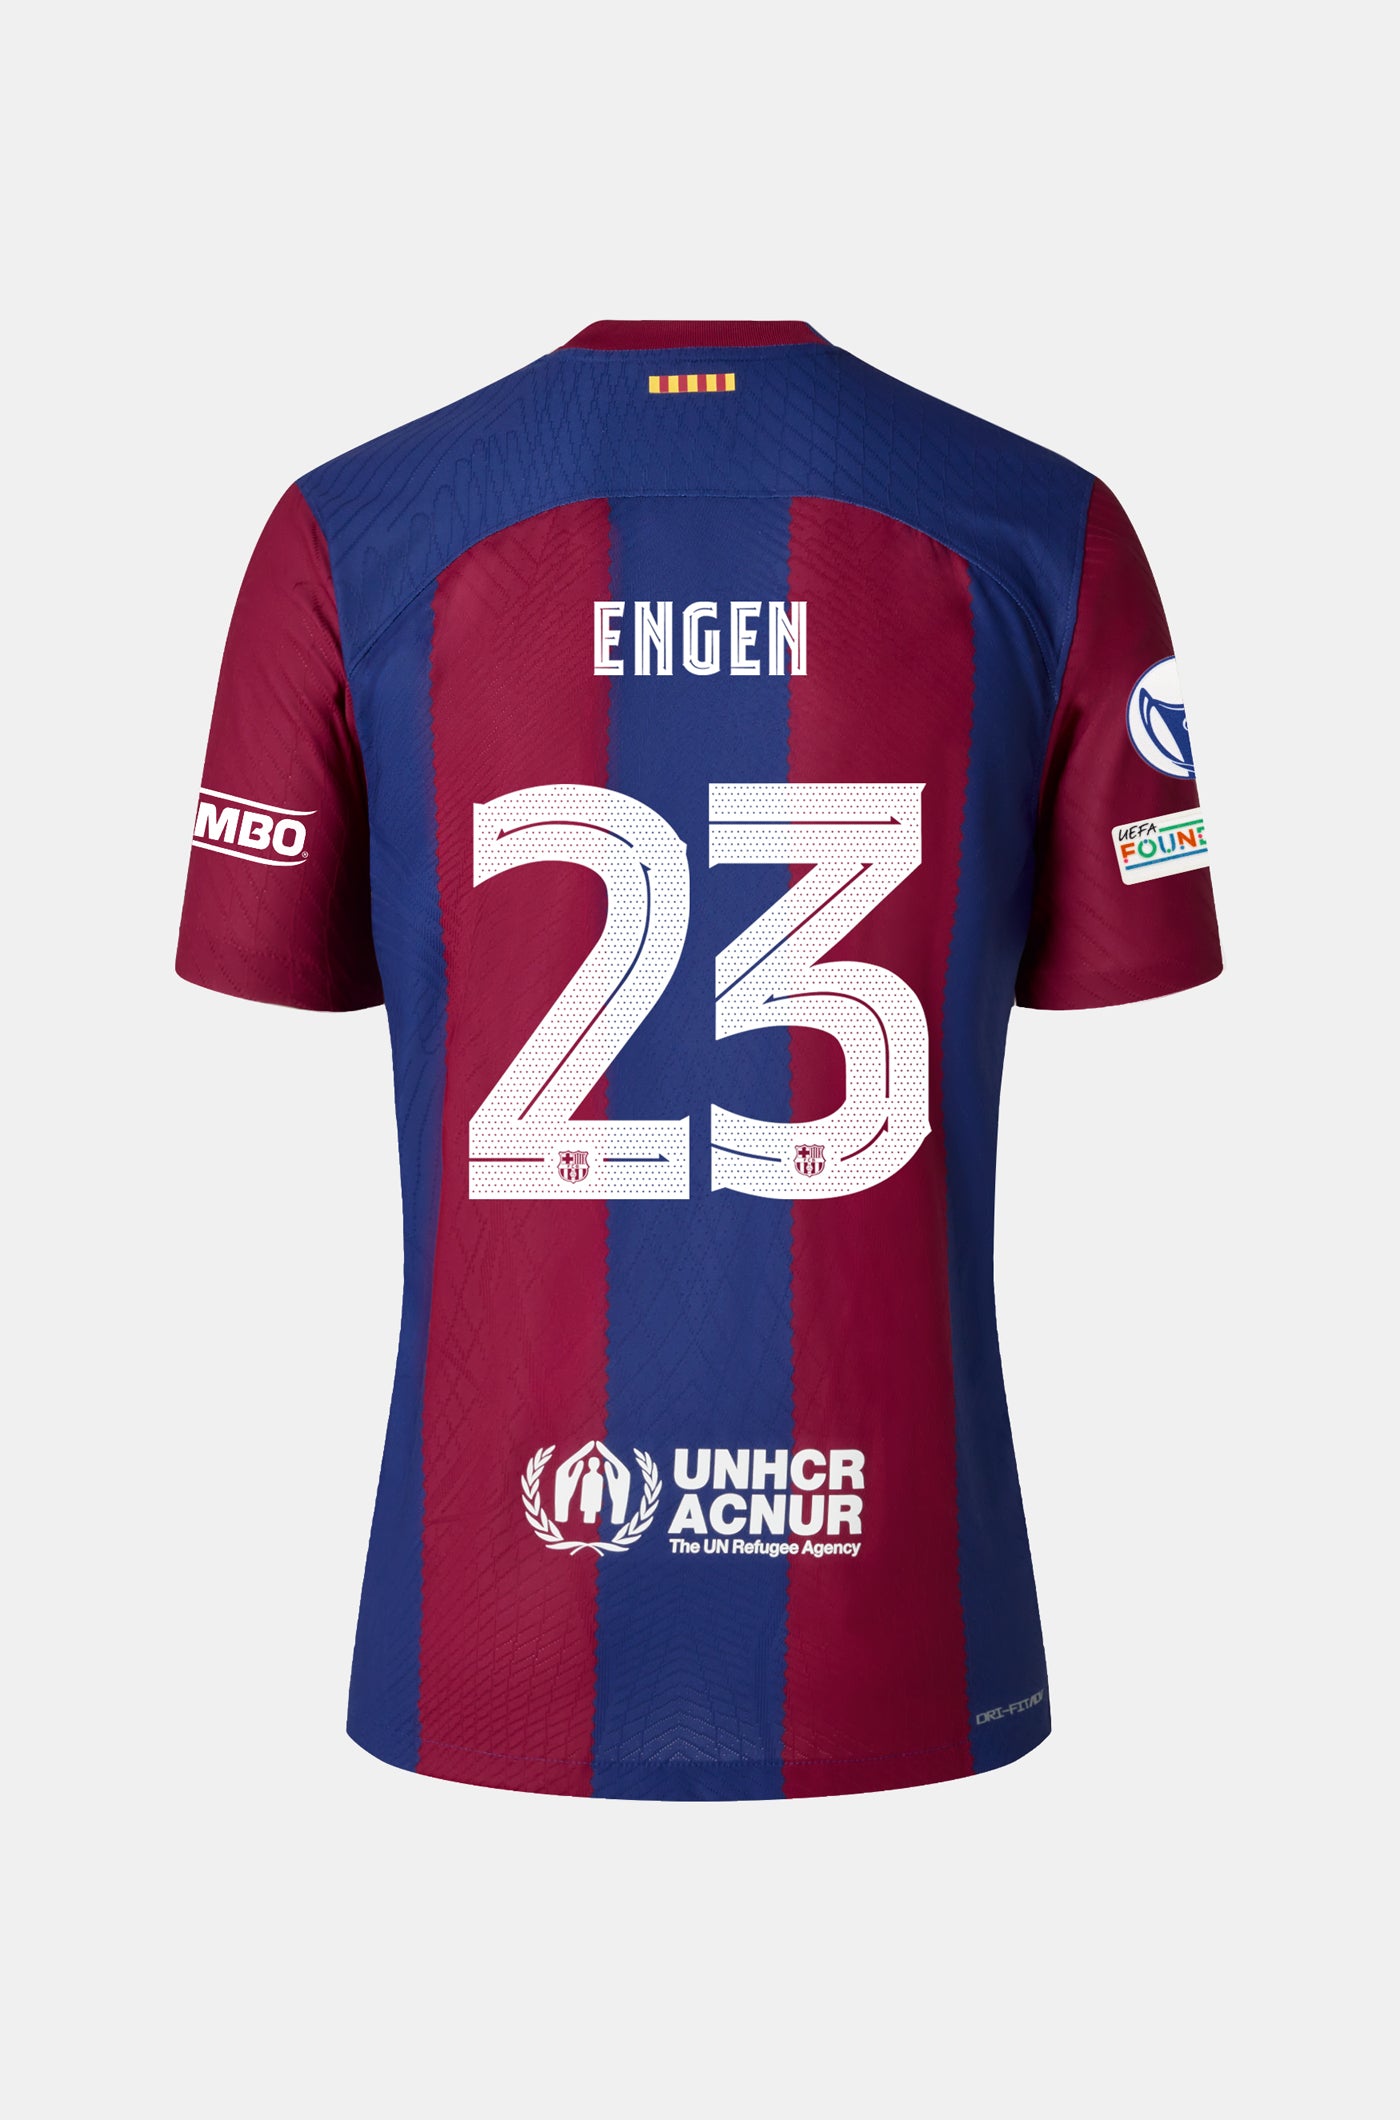 UWCL FC Barcelona home shirt 23/24 Player's Edition  - ENGEN